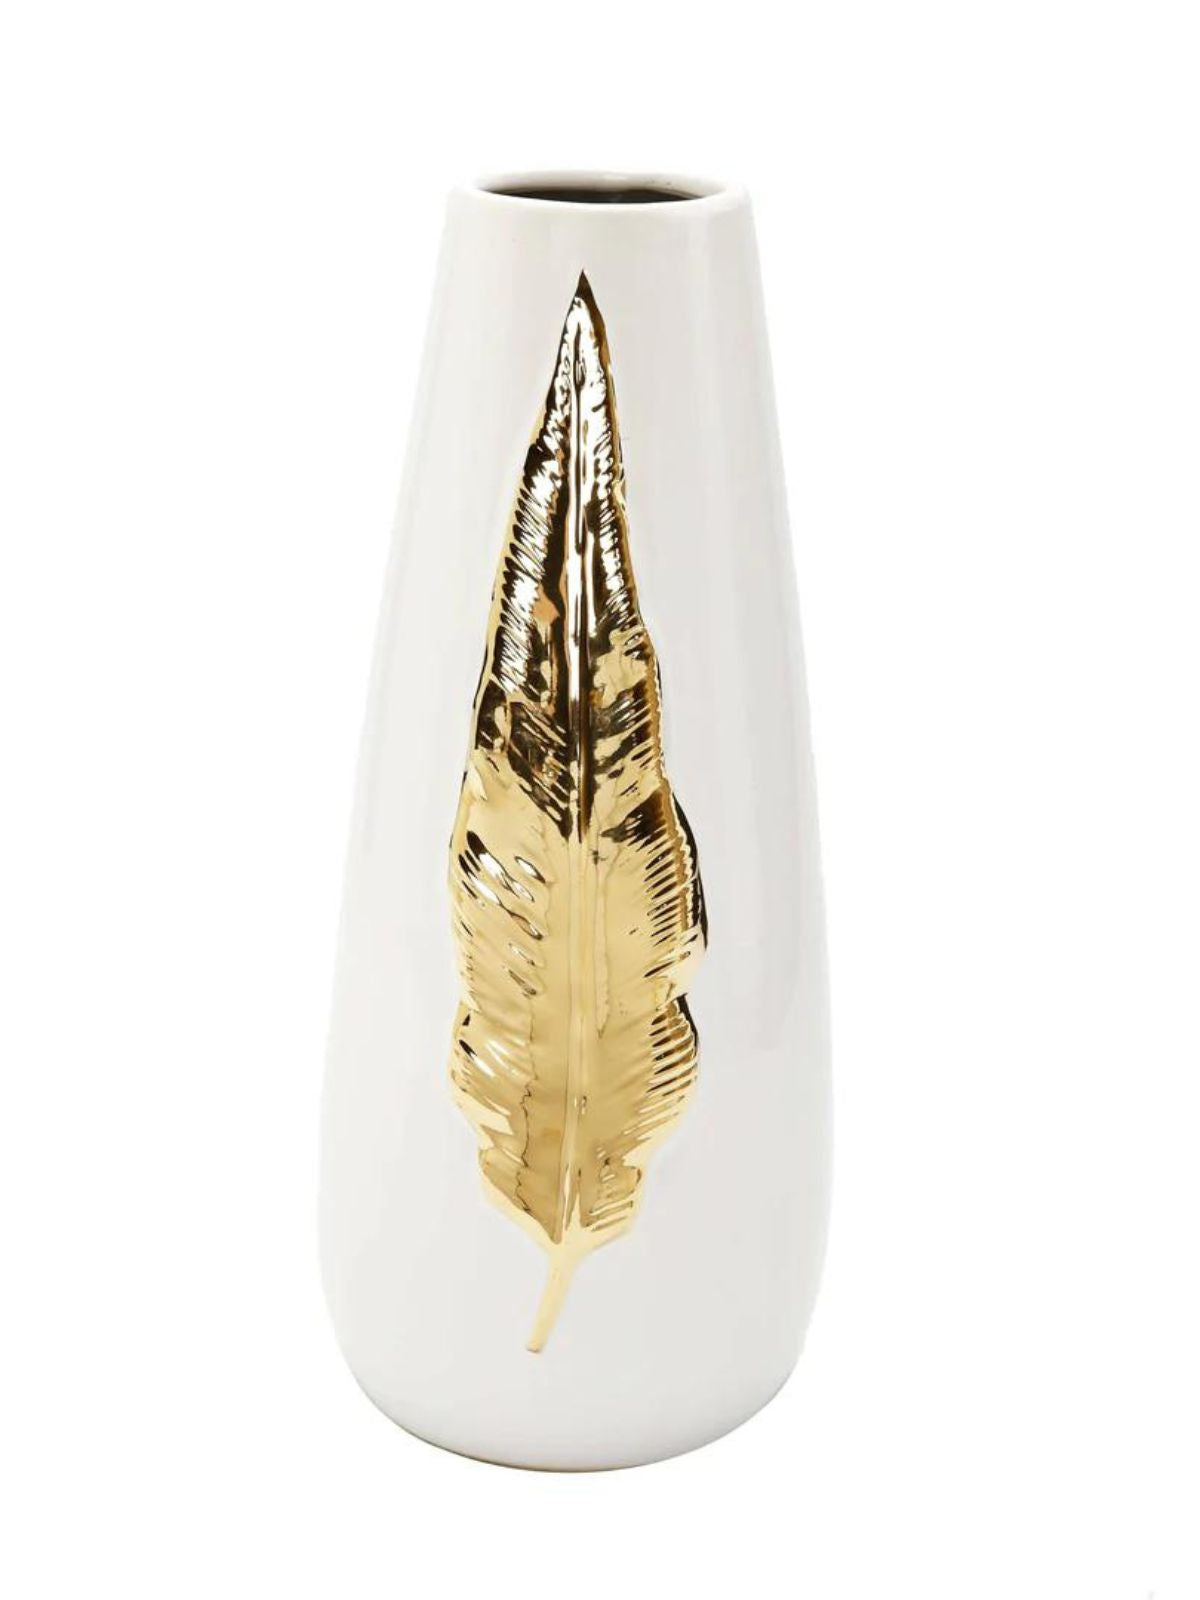 16H White Ceramic Decorative Vase with Gold Leaf Design - KYA Home Decor